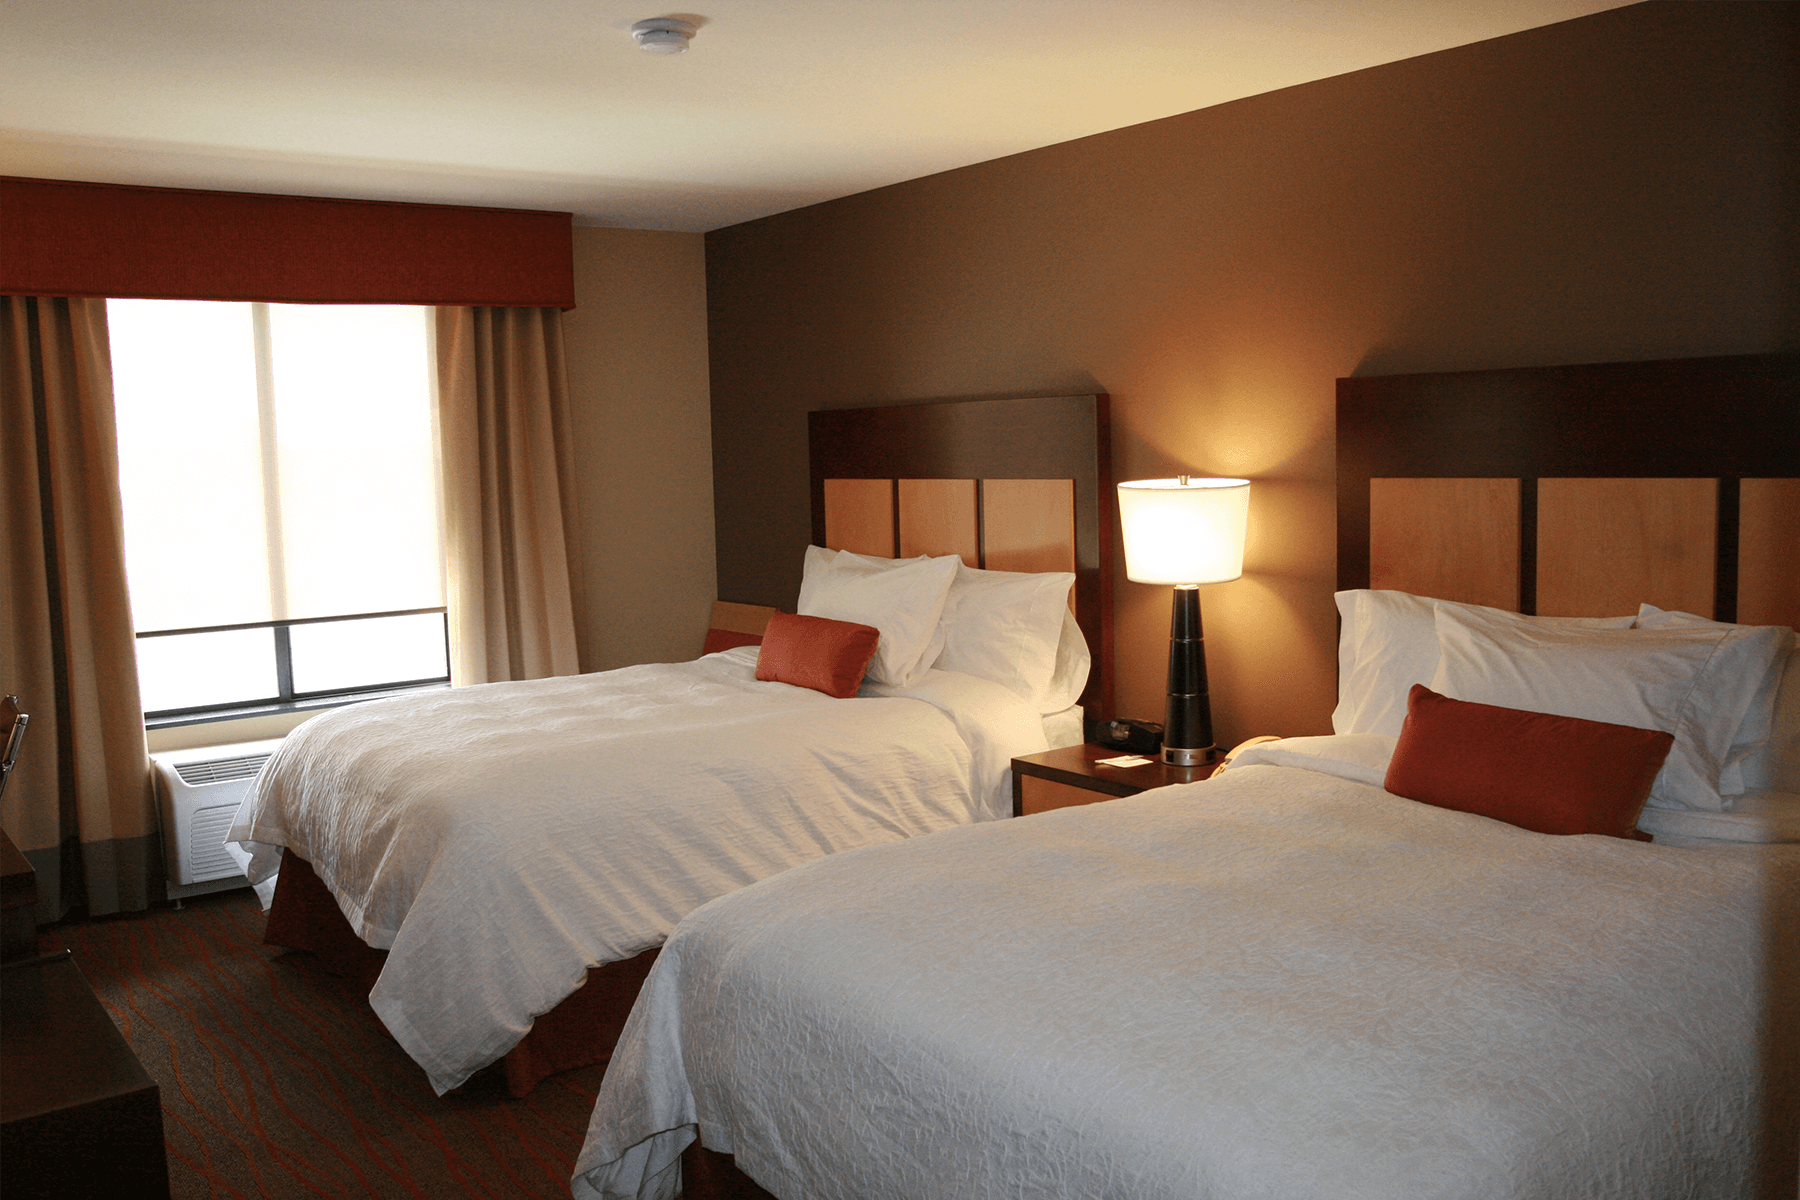  Spokane Inn and Suites Spokane room interior double beds 